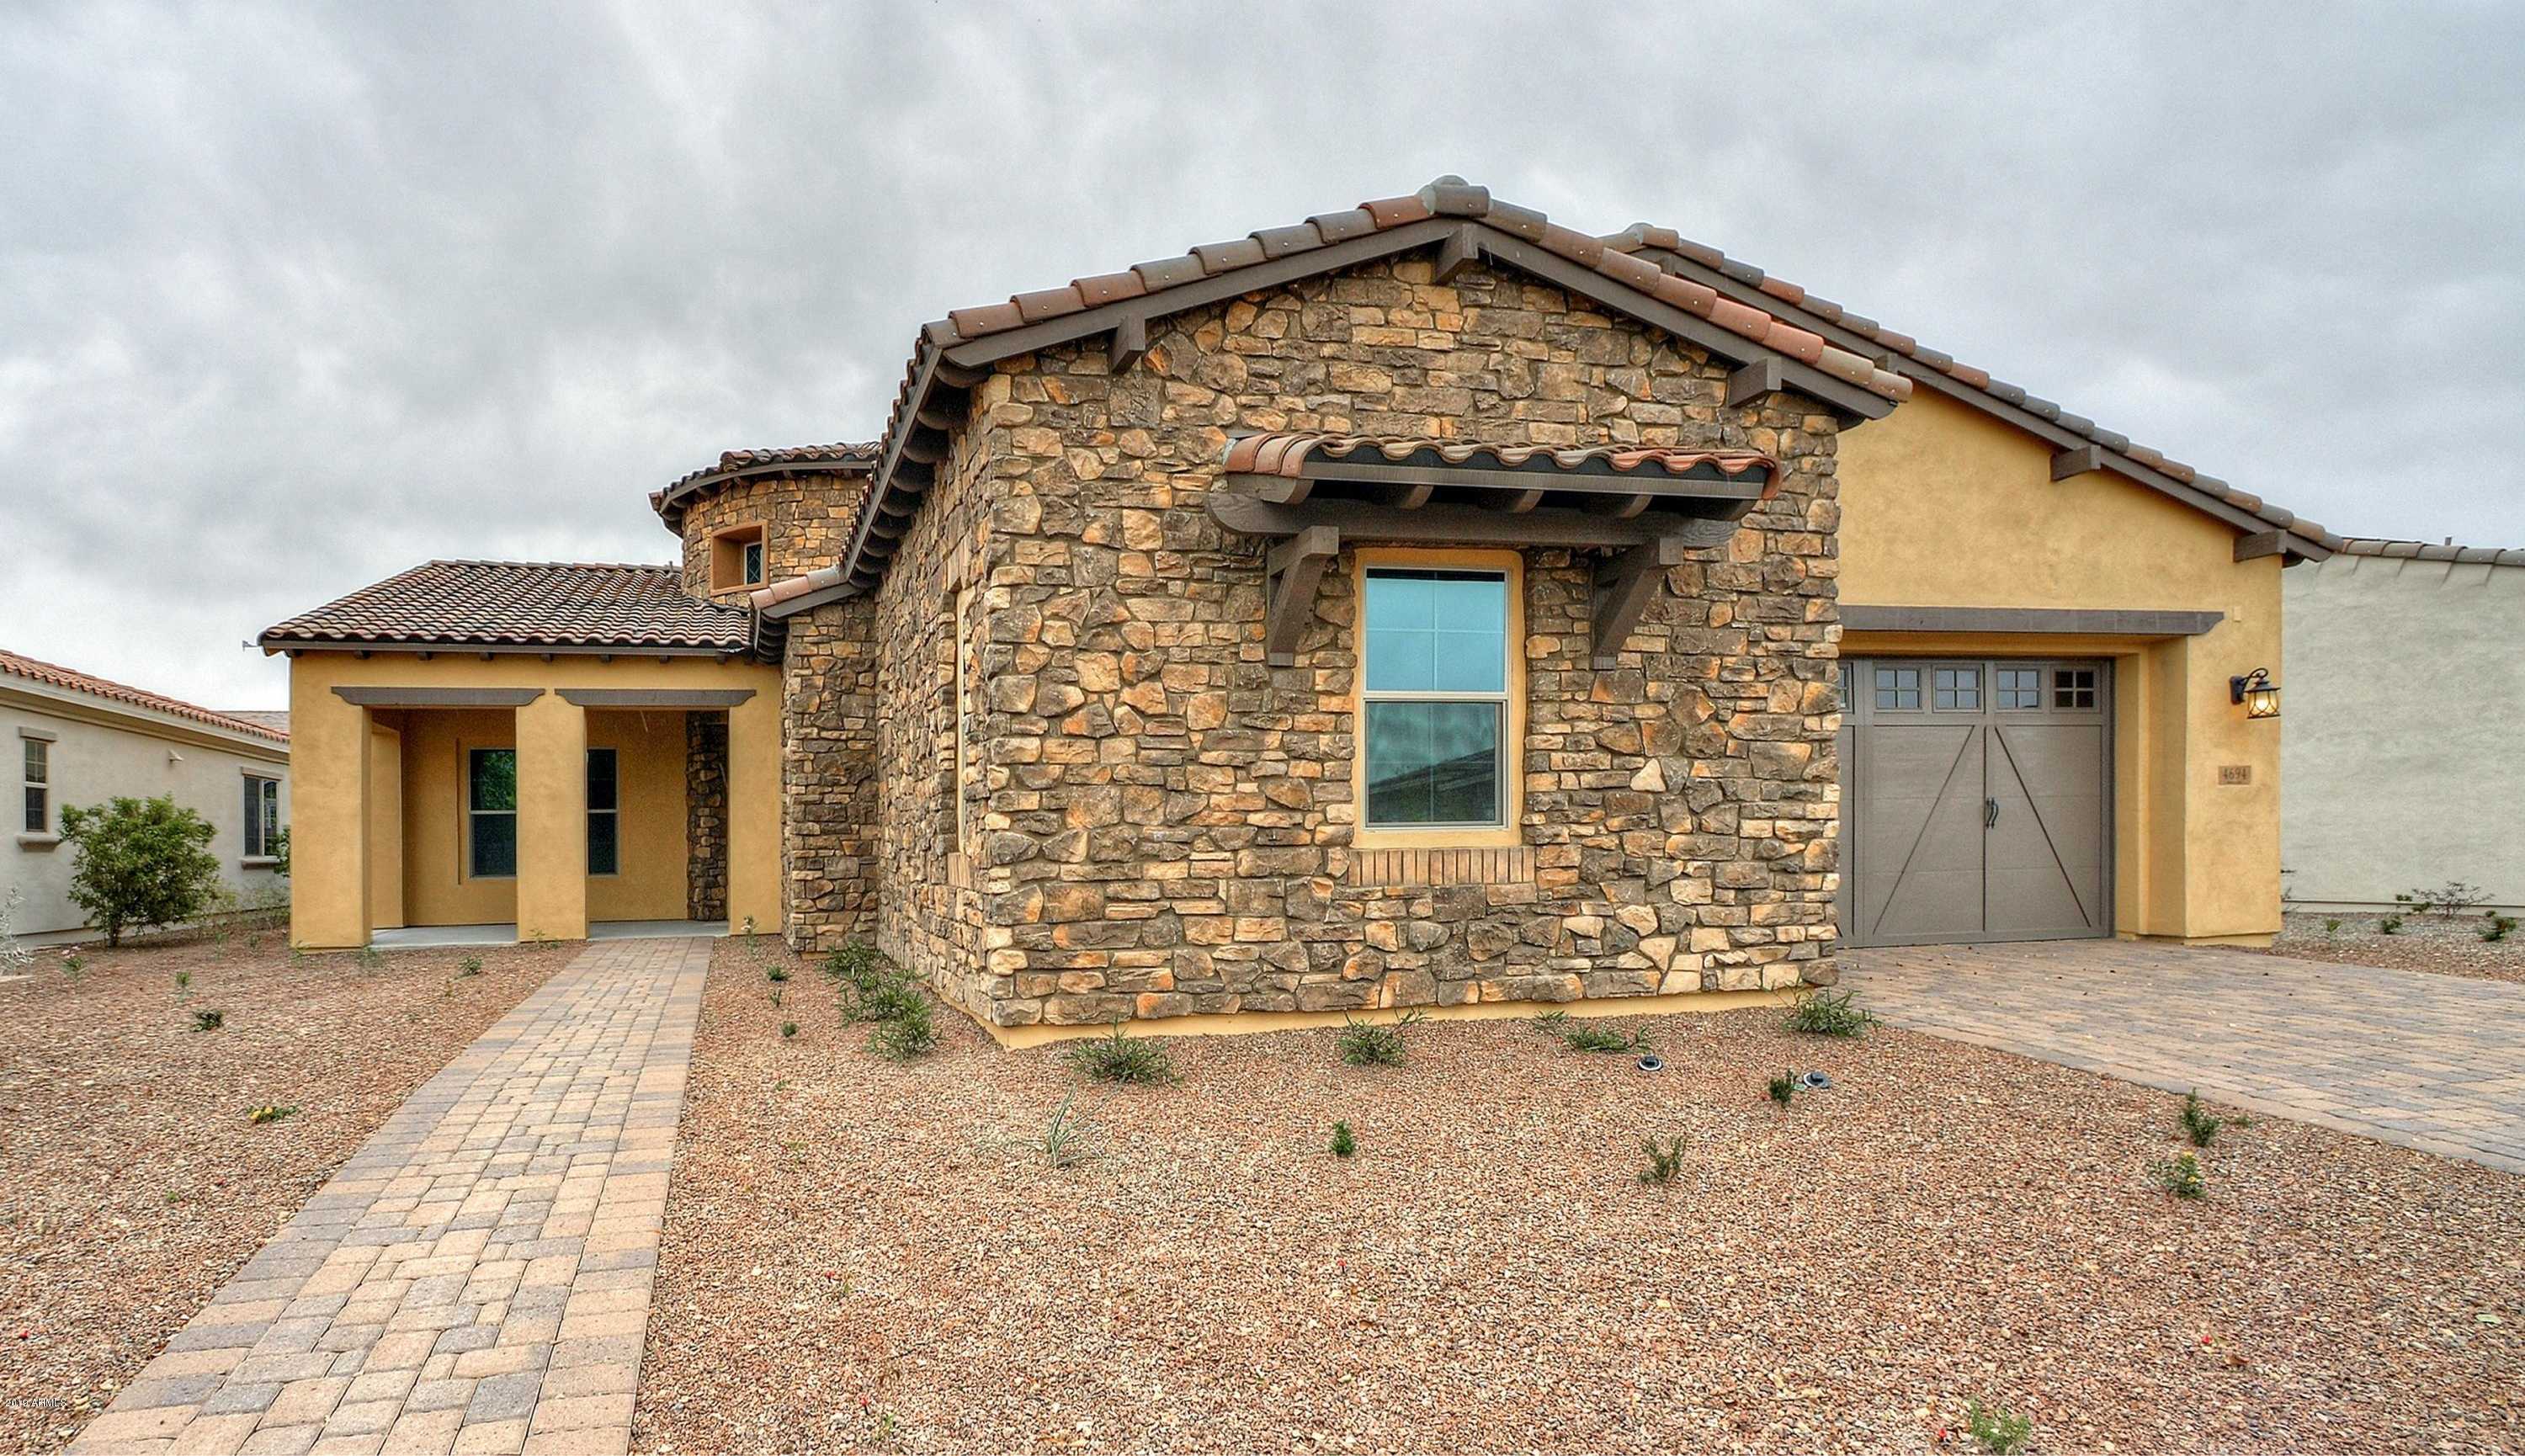 Verrado Buckeye Arizona Homes For Sale With Corey Frederic